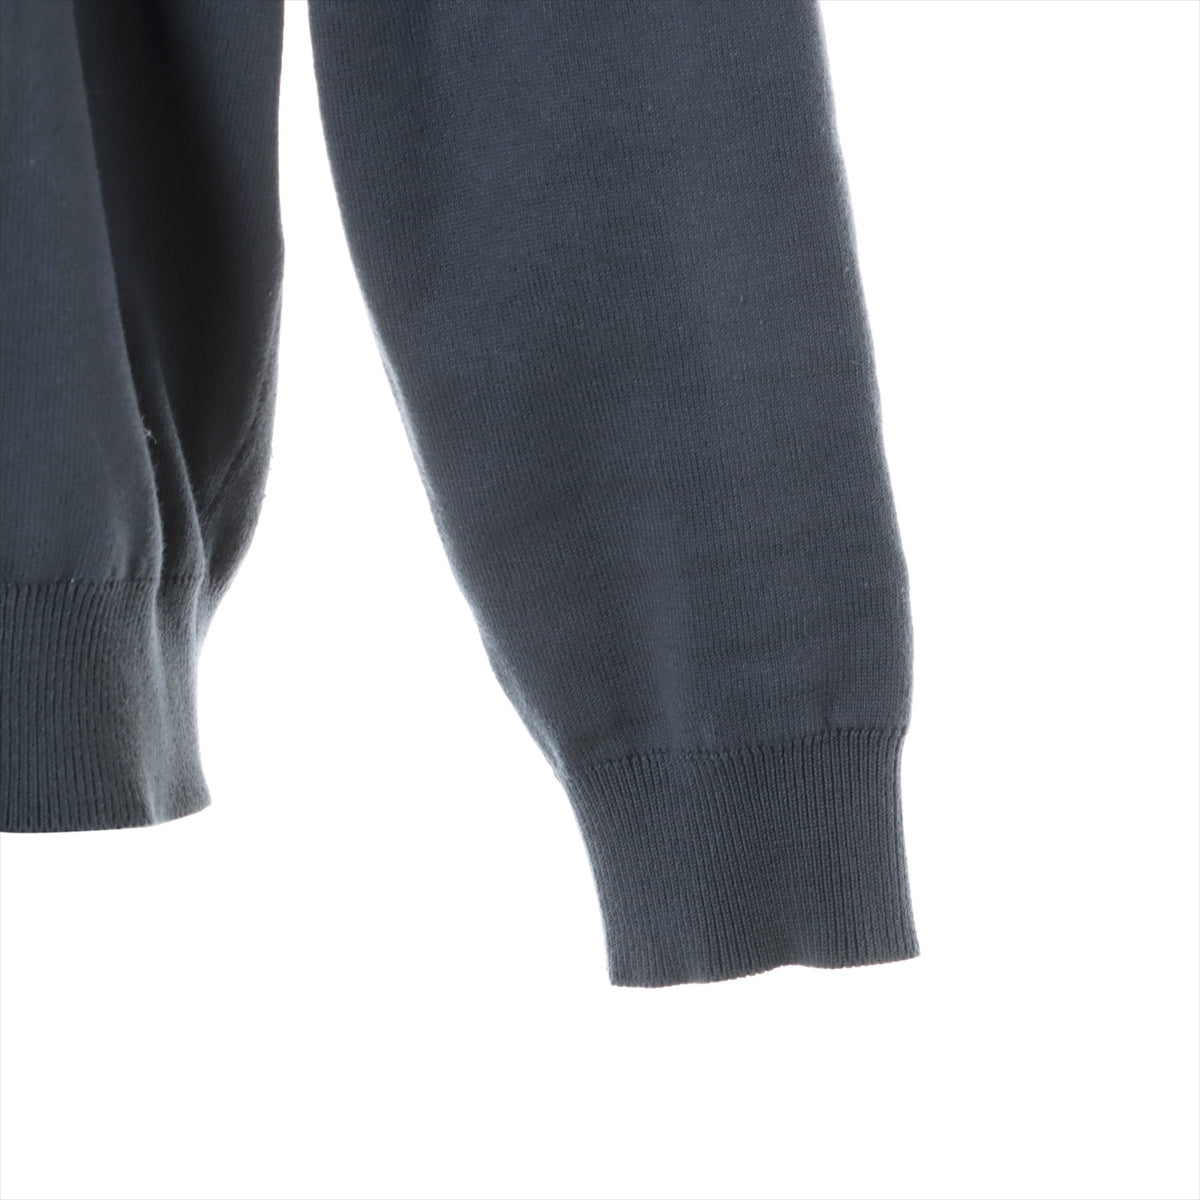 Louis Vuitton 24SS Cotton Basic knitted fabric XL Men's Navy blue  gradient cotton crew neck RM241Q